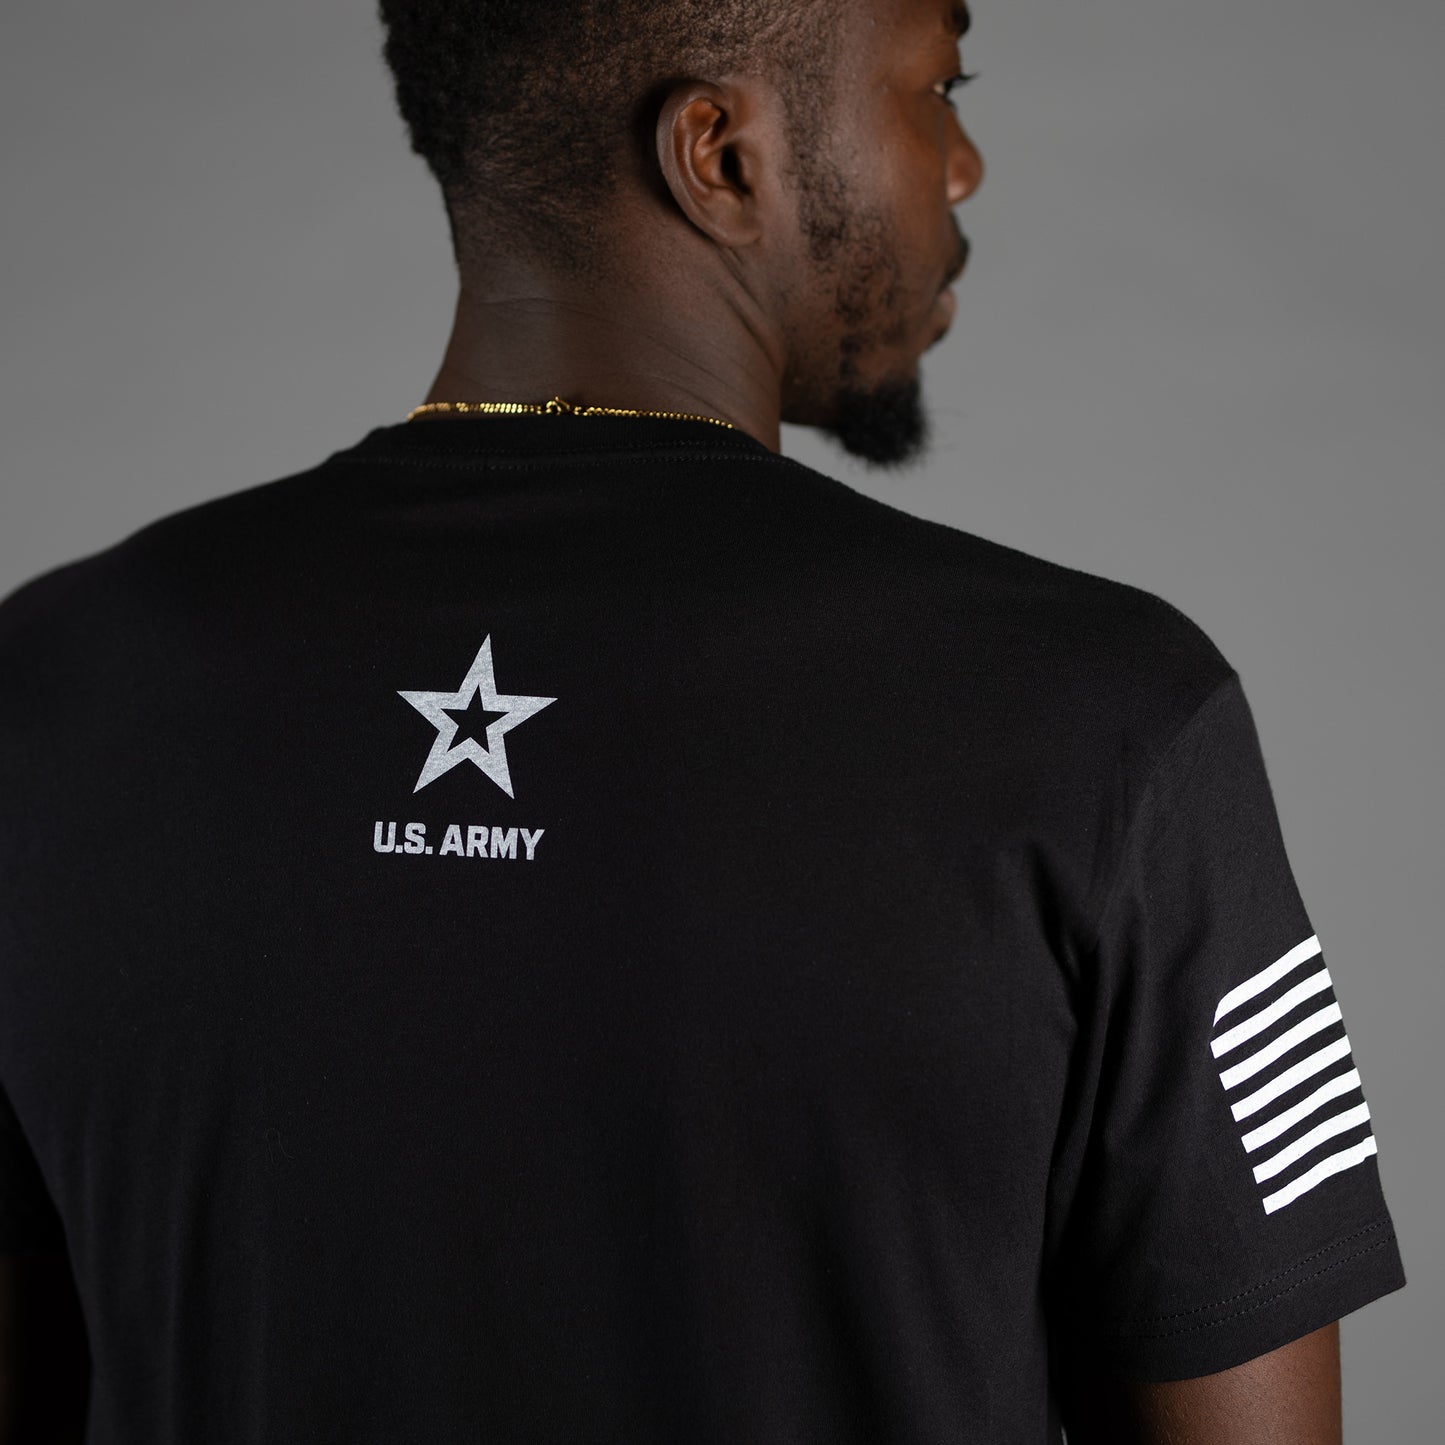 Military Shirts - Army Shirts